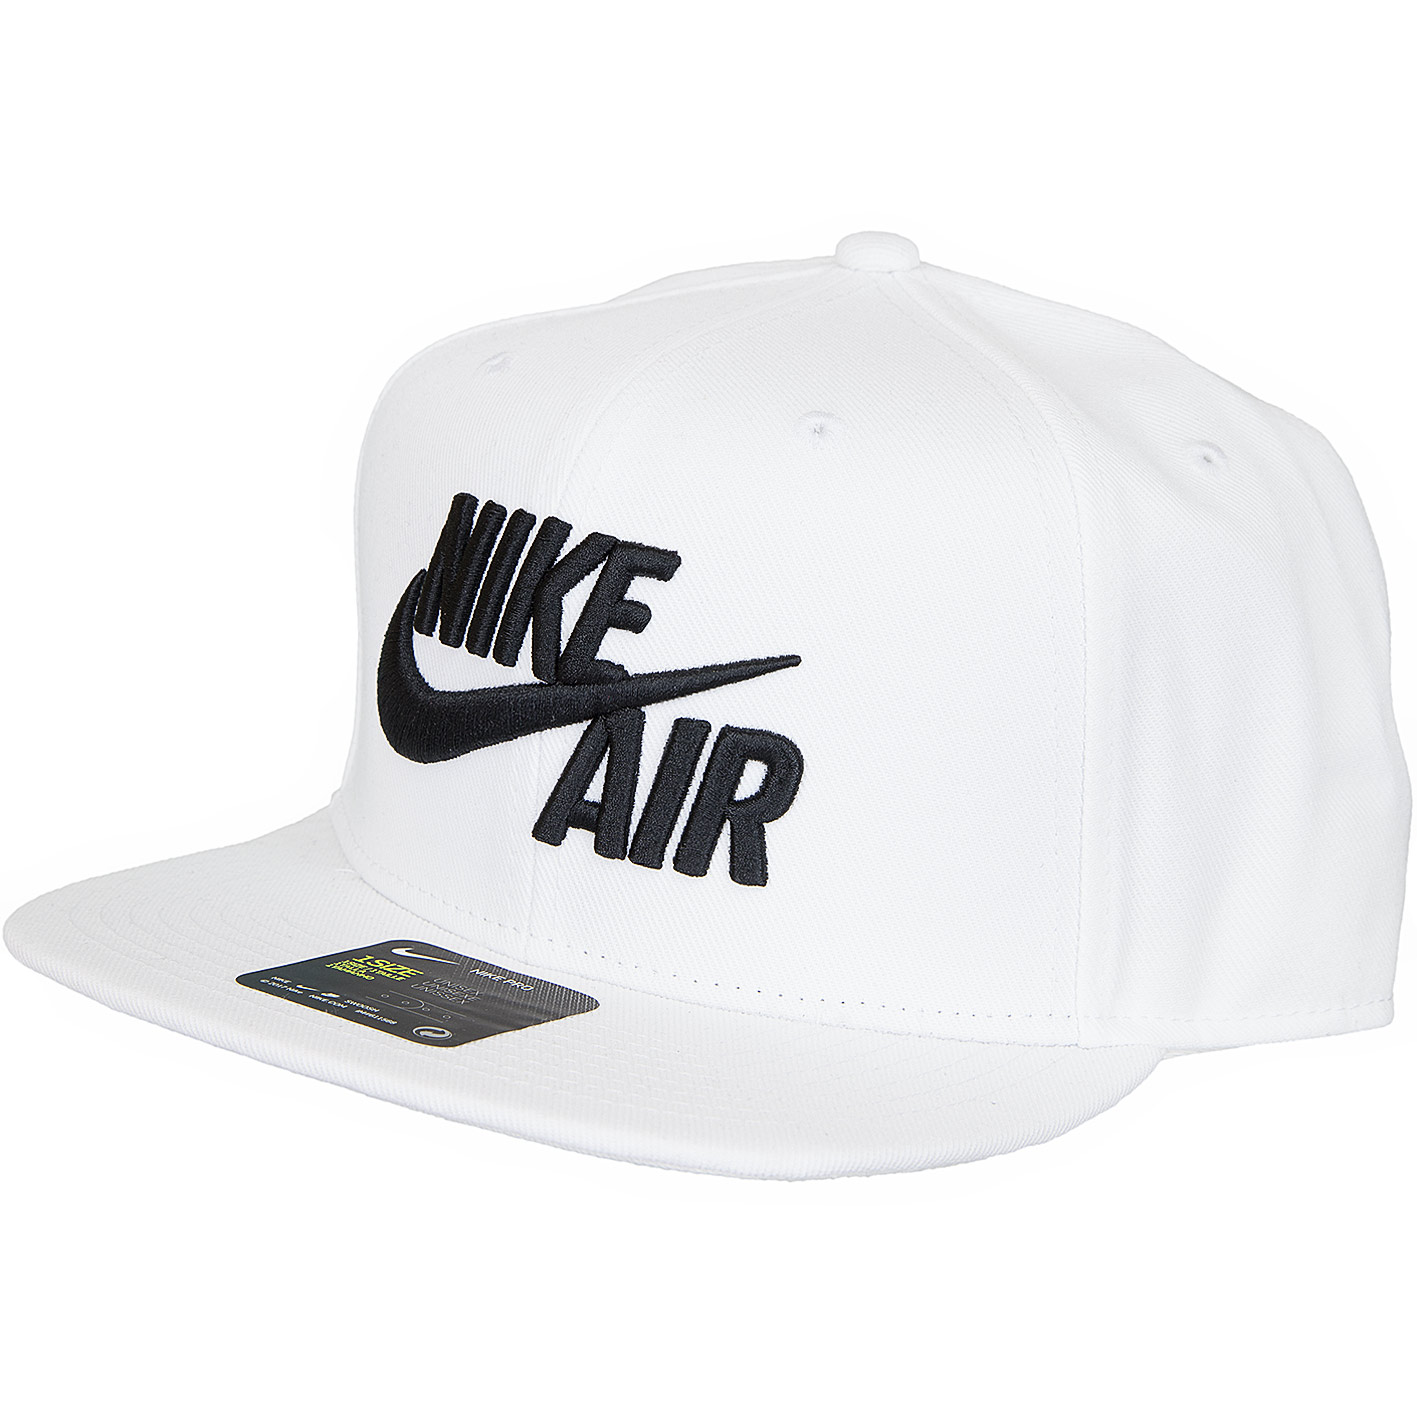 ☆ Nike Snapback Cap Air Classic Pro weiß/schwarz - hier bestellen!